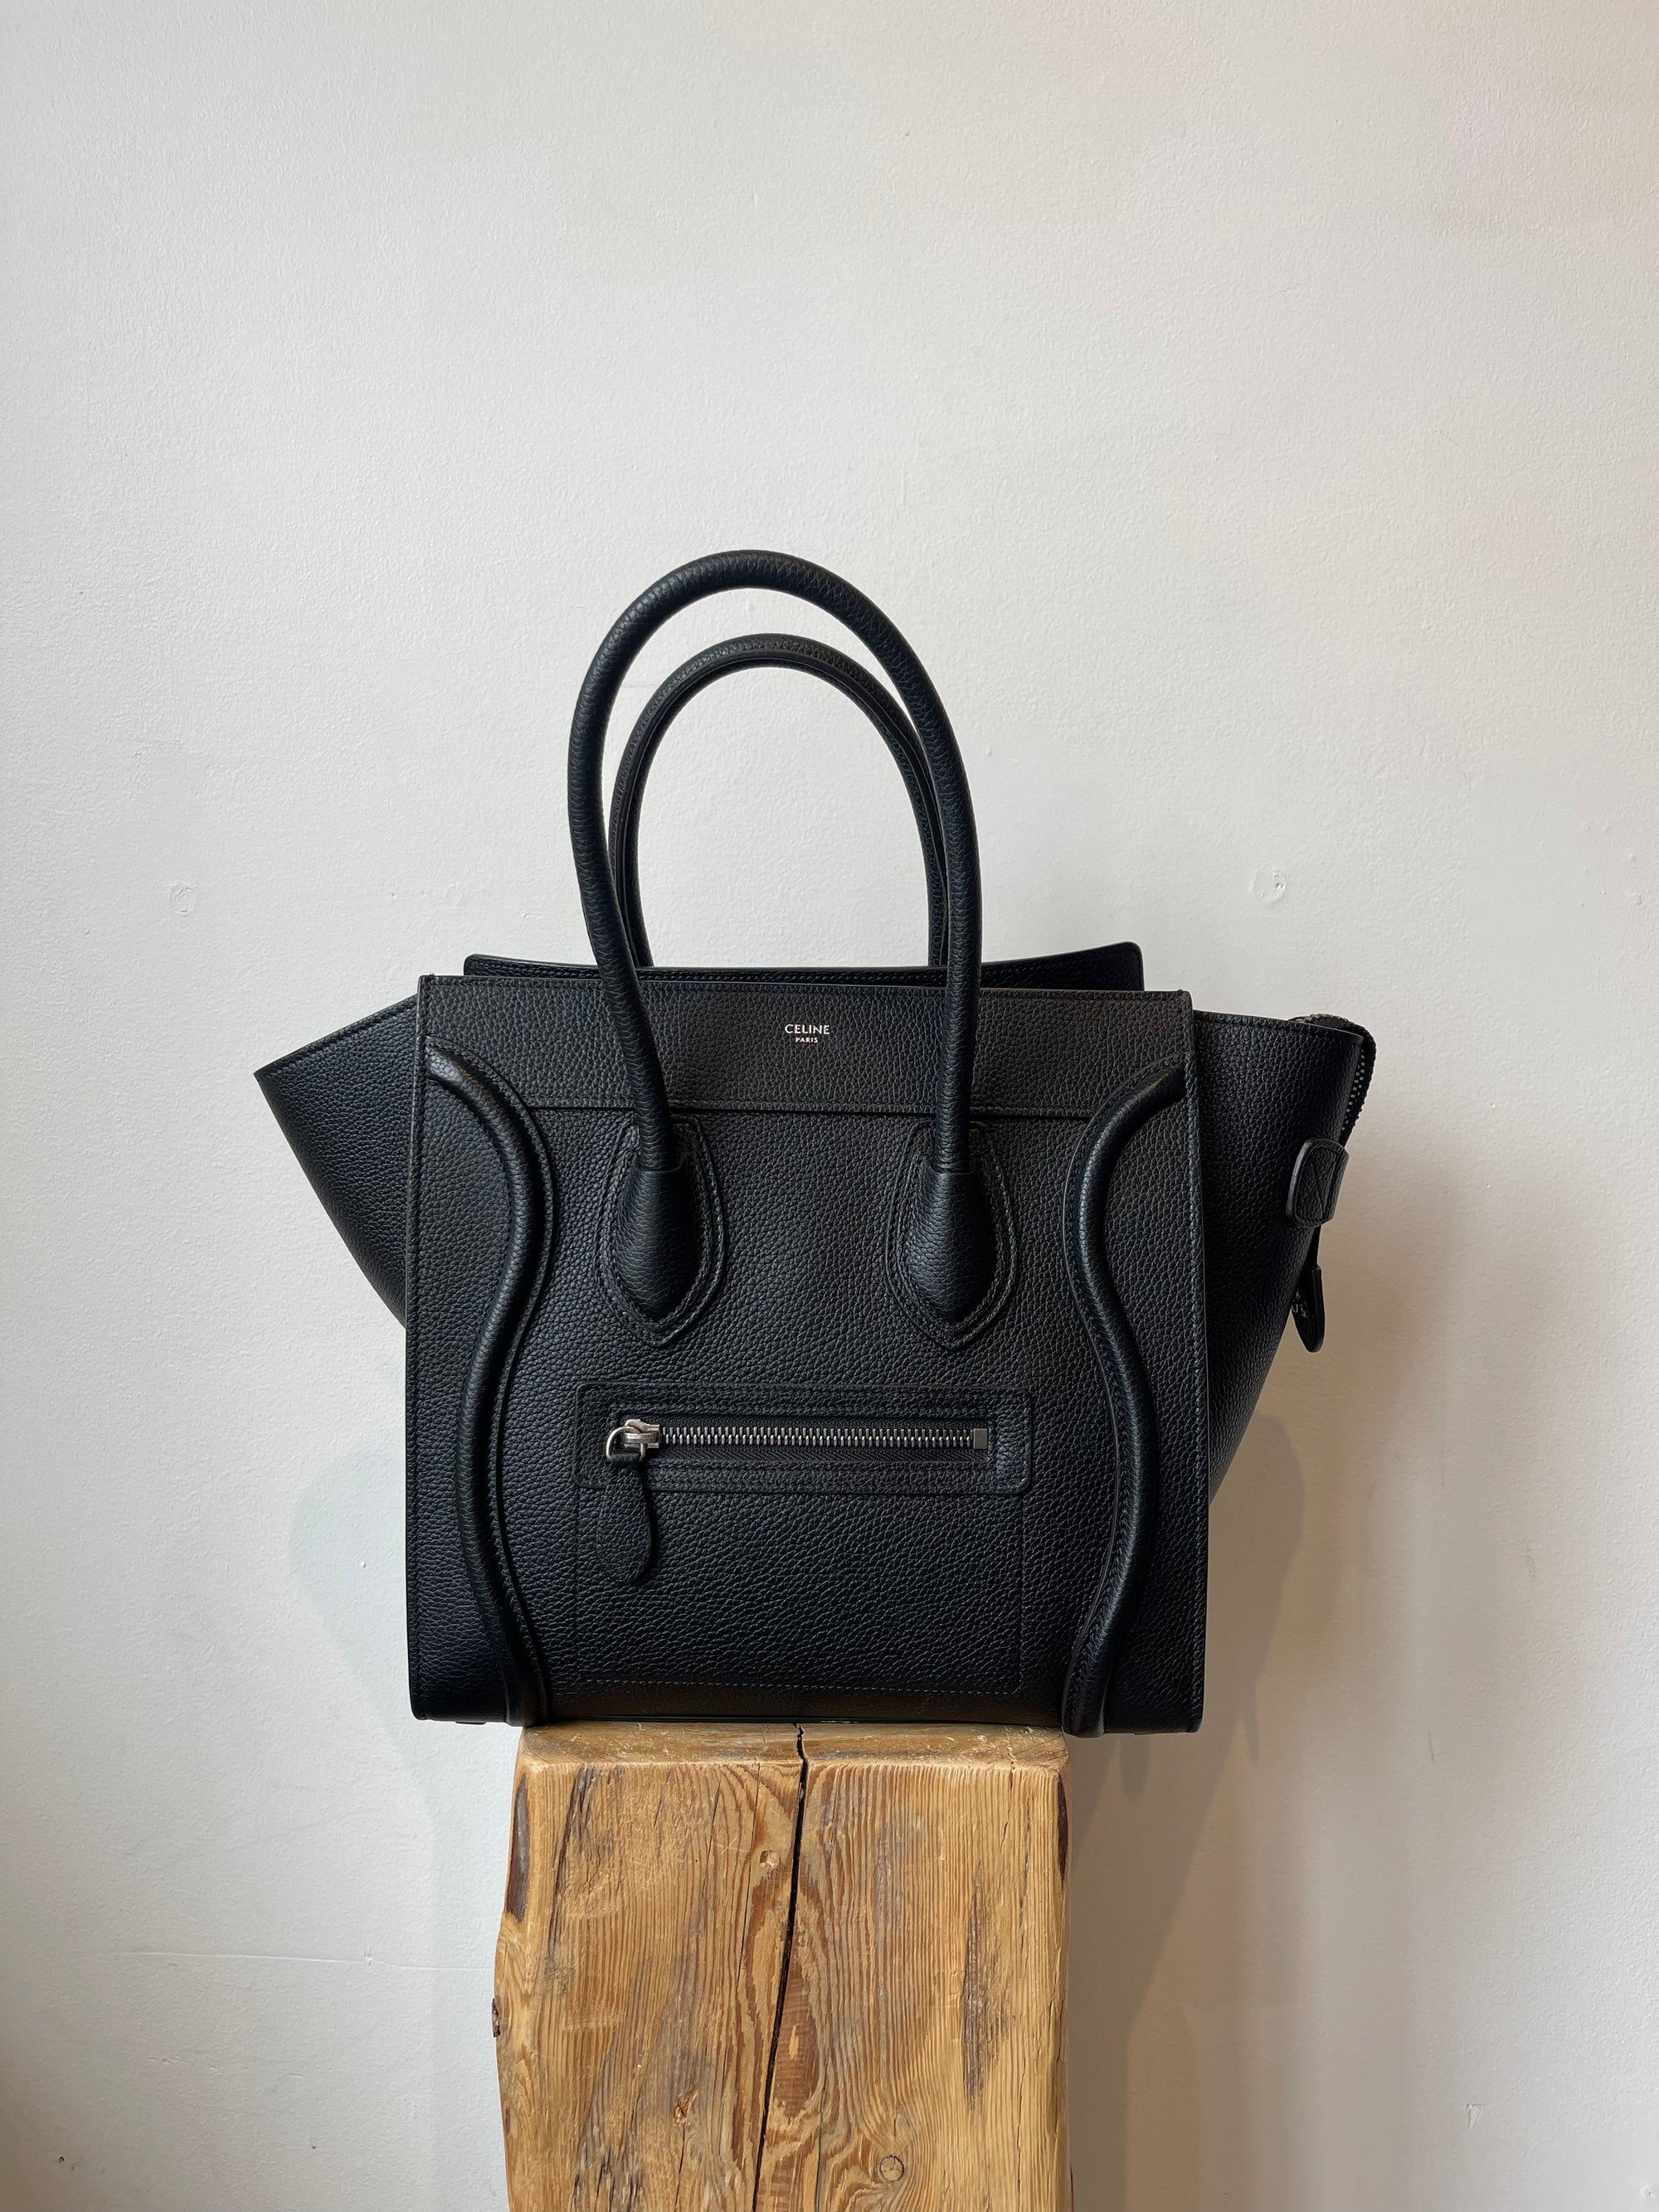 Celine, Micro Luggage Handbag in Black